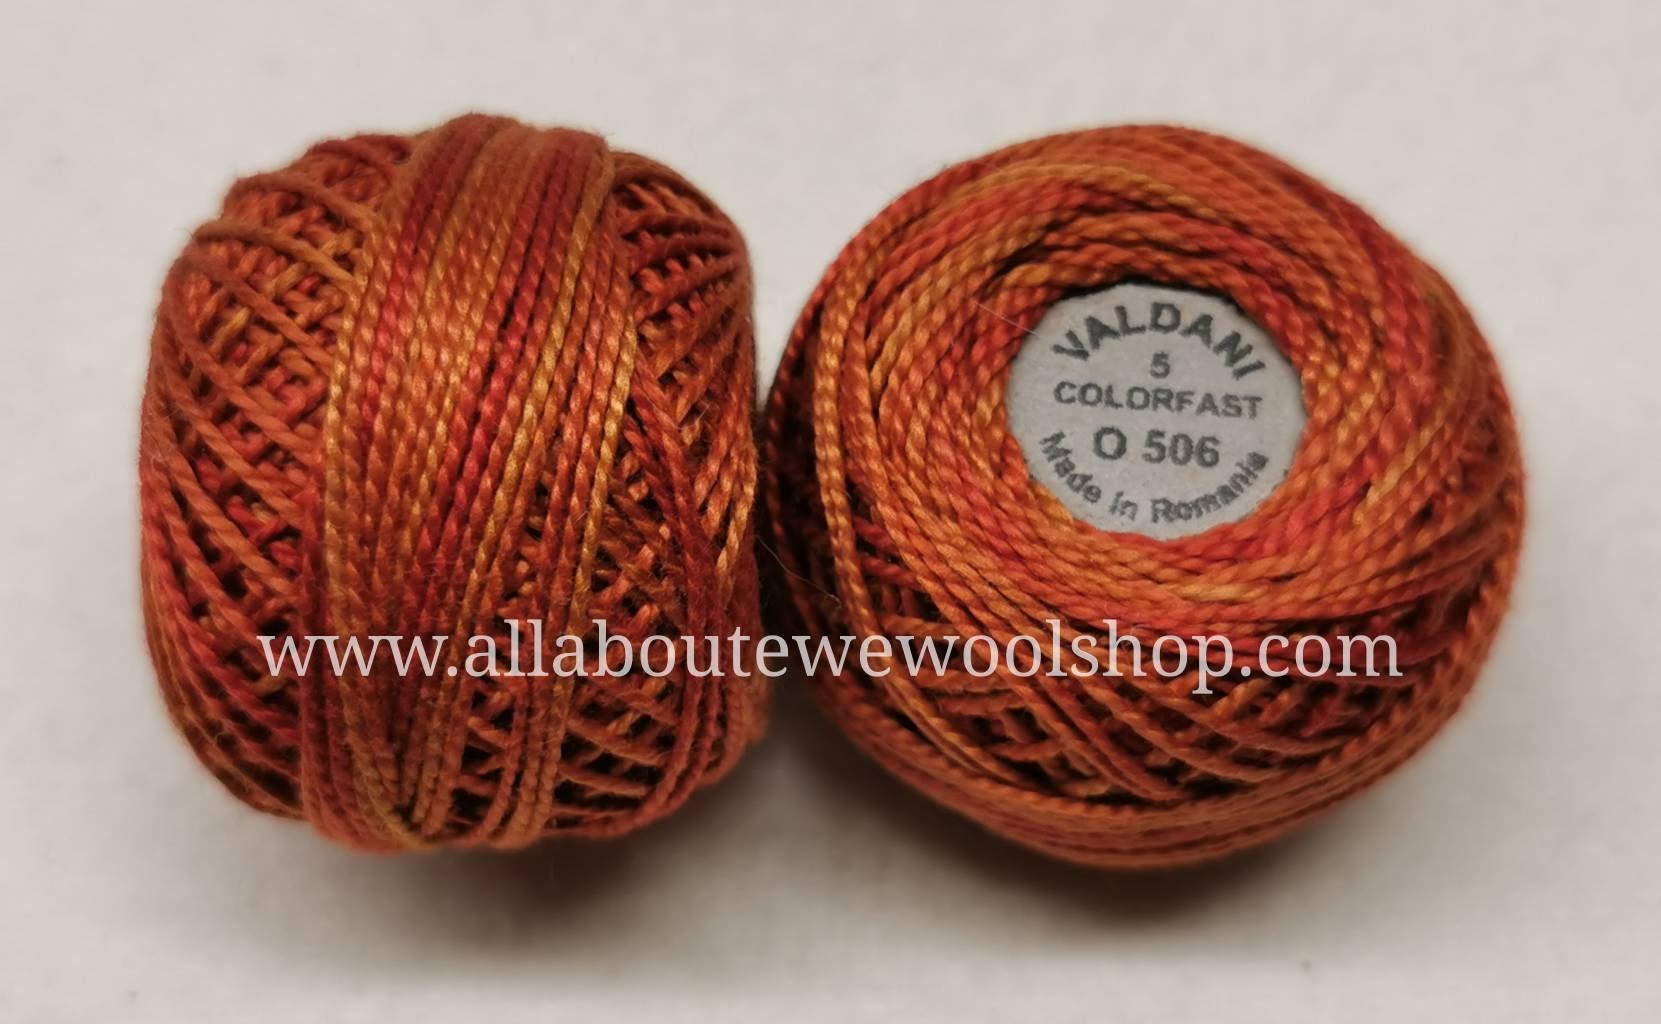 O506 #5 Valdani Pearl/Perle Cotton Thread - All About Ewe Wool Shop